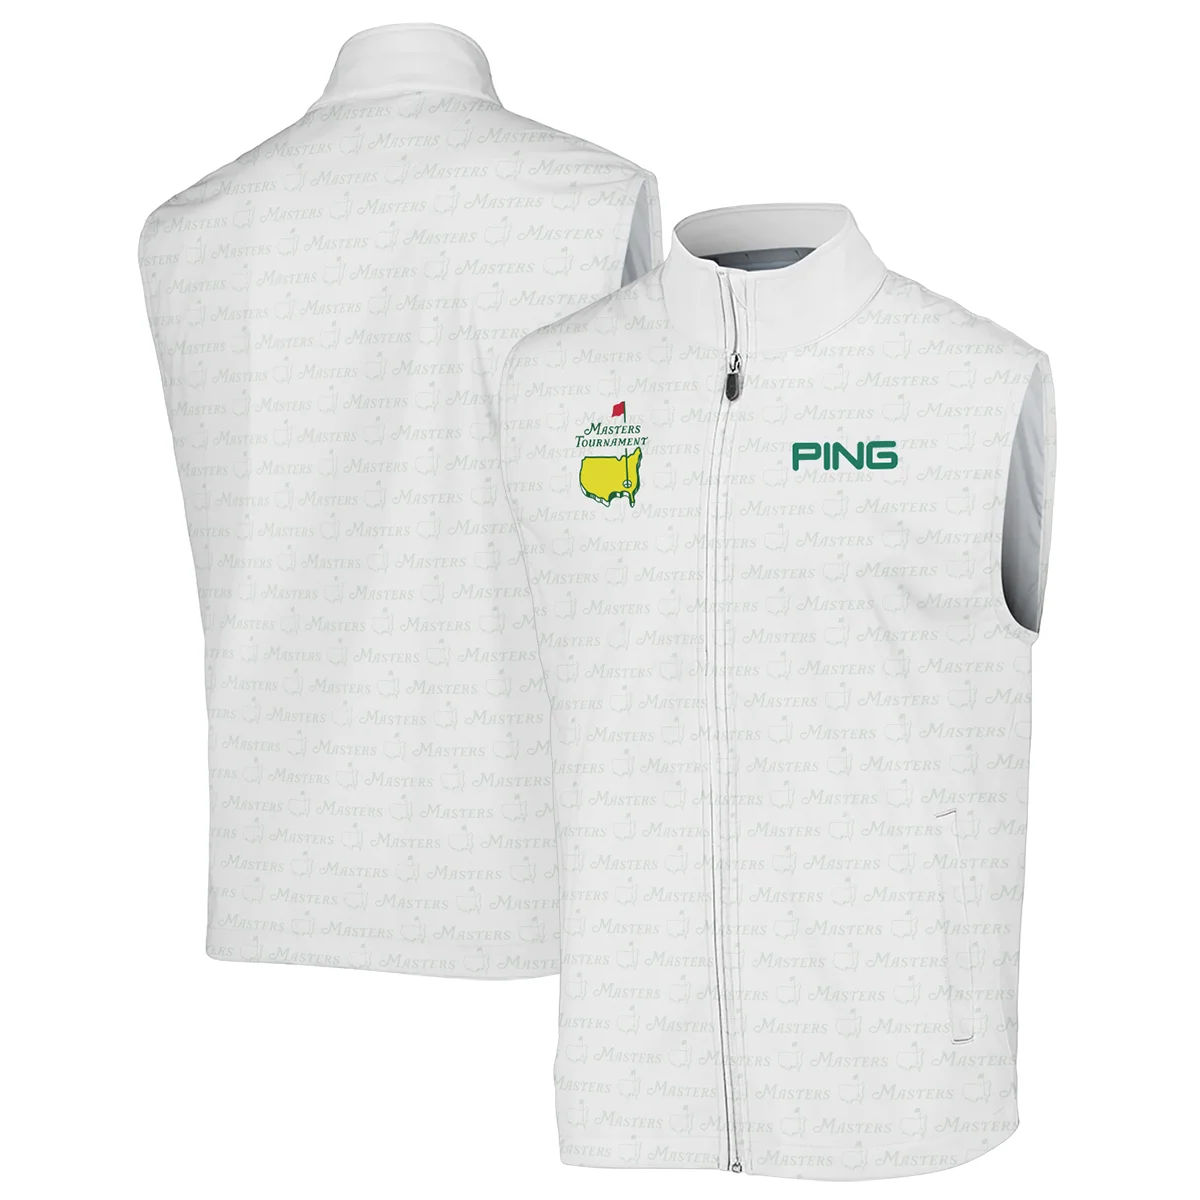 Pattern Masters Tournament Ping Long Polo Shirt White Green Sport Love Clothing Long Polo Shirt For Men